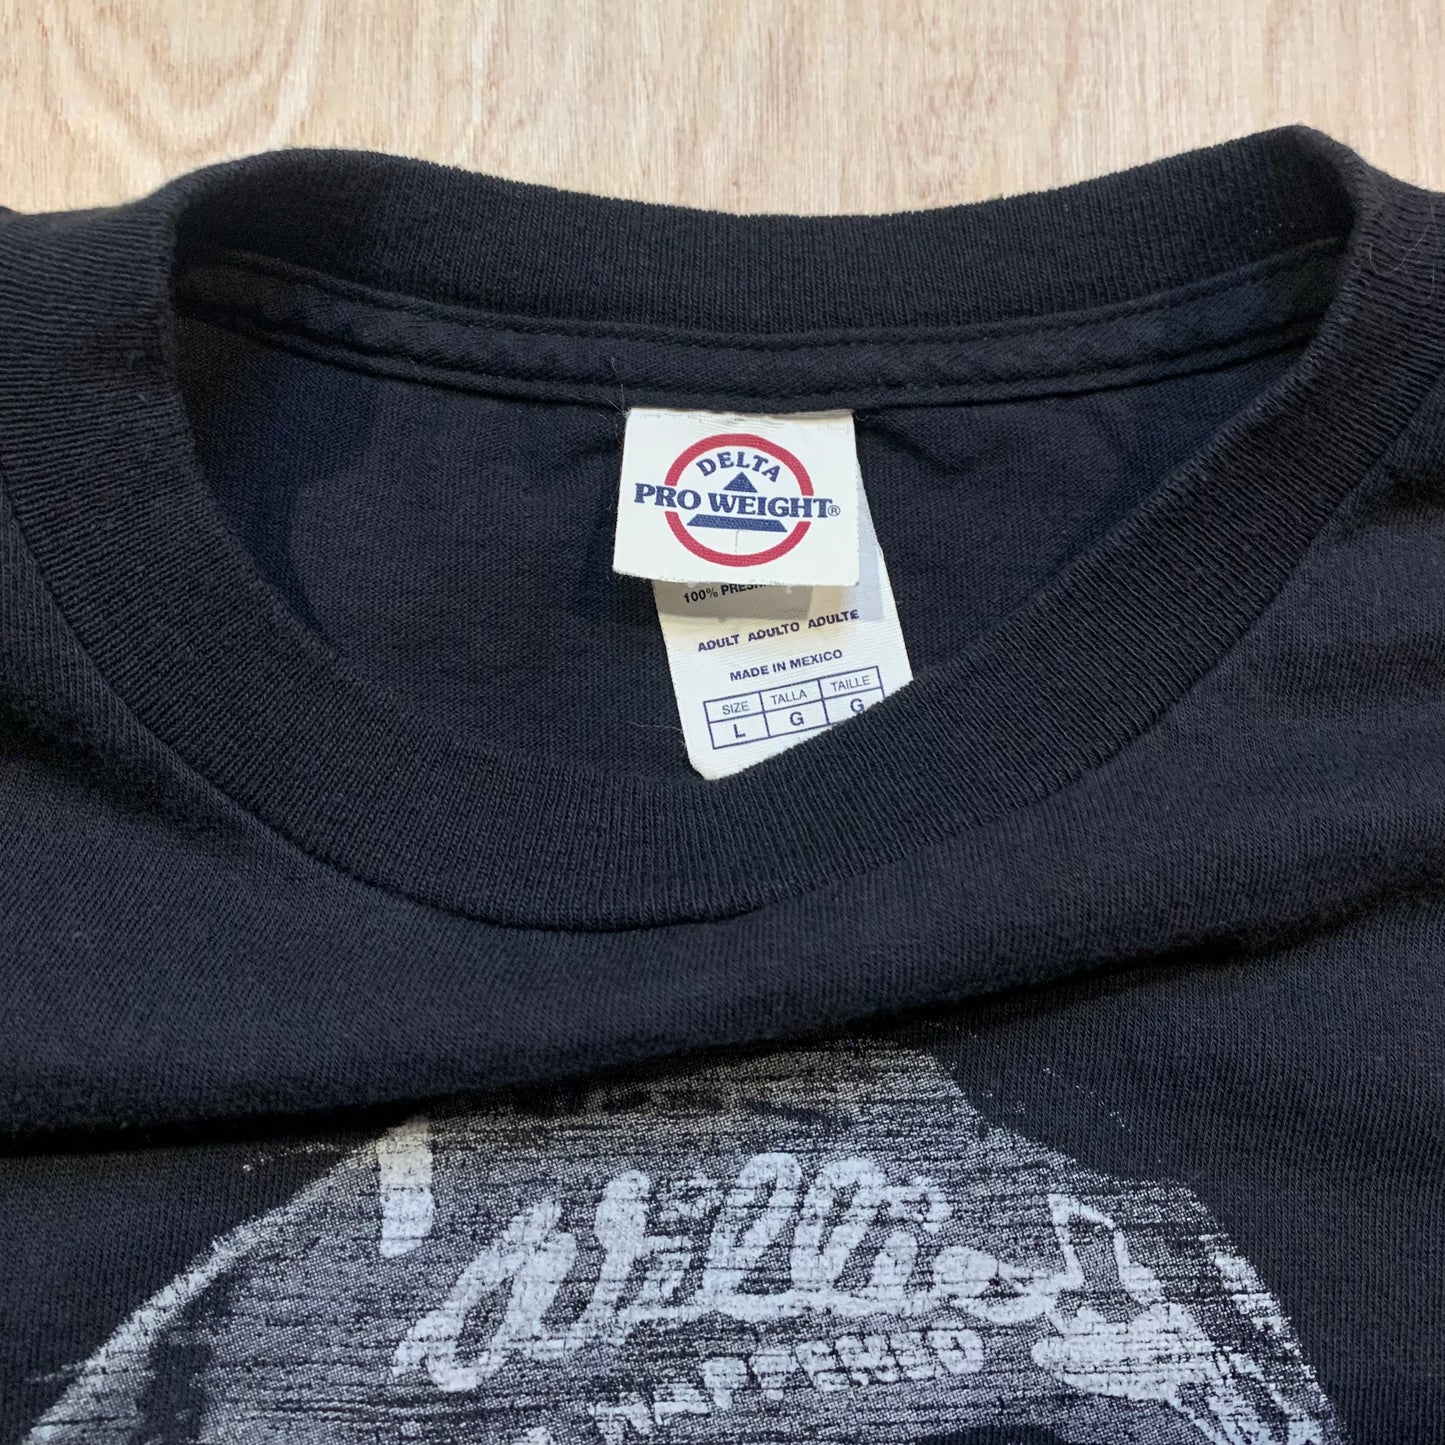 Y2K Willie Nelson T-Shirt